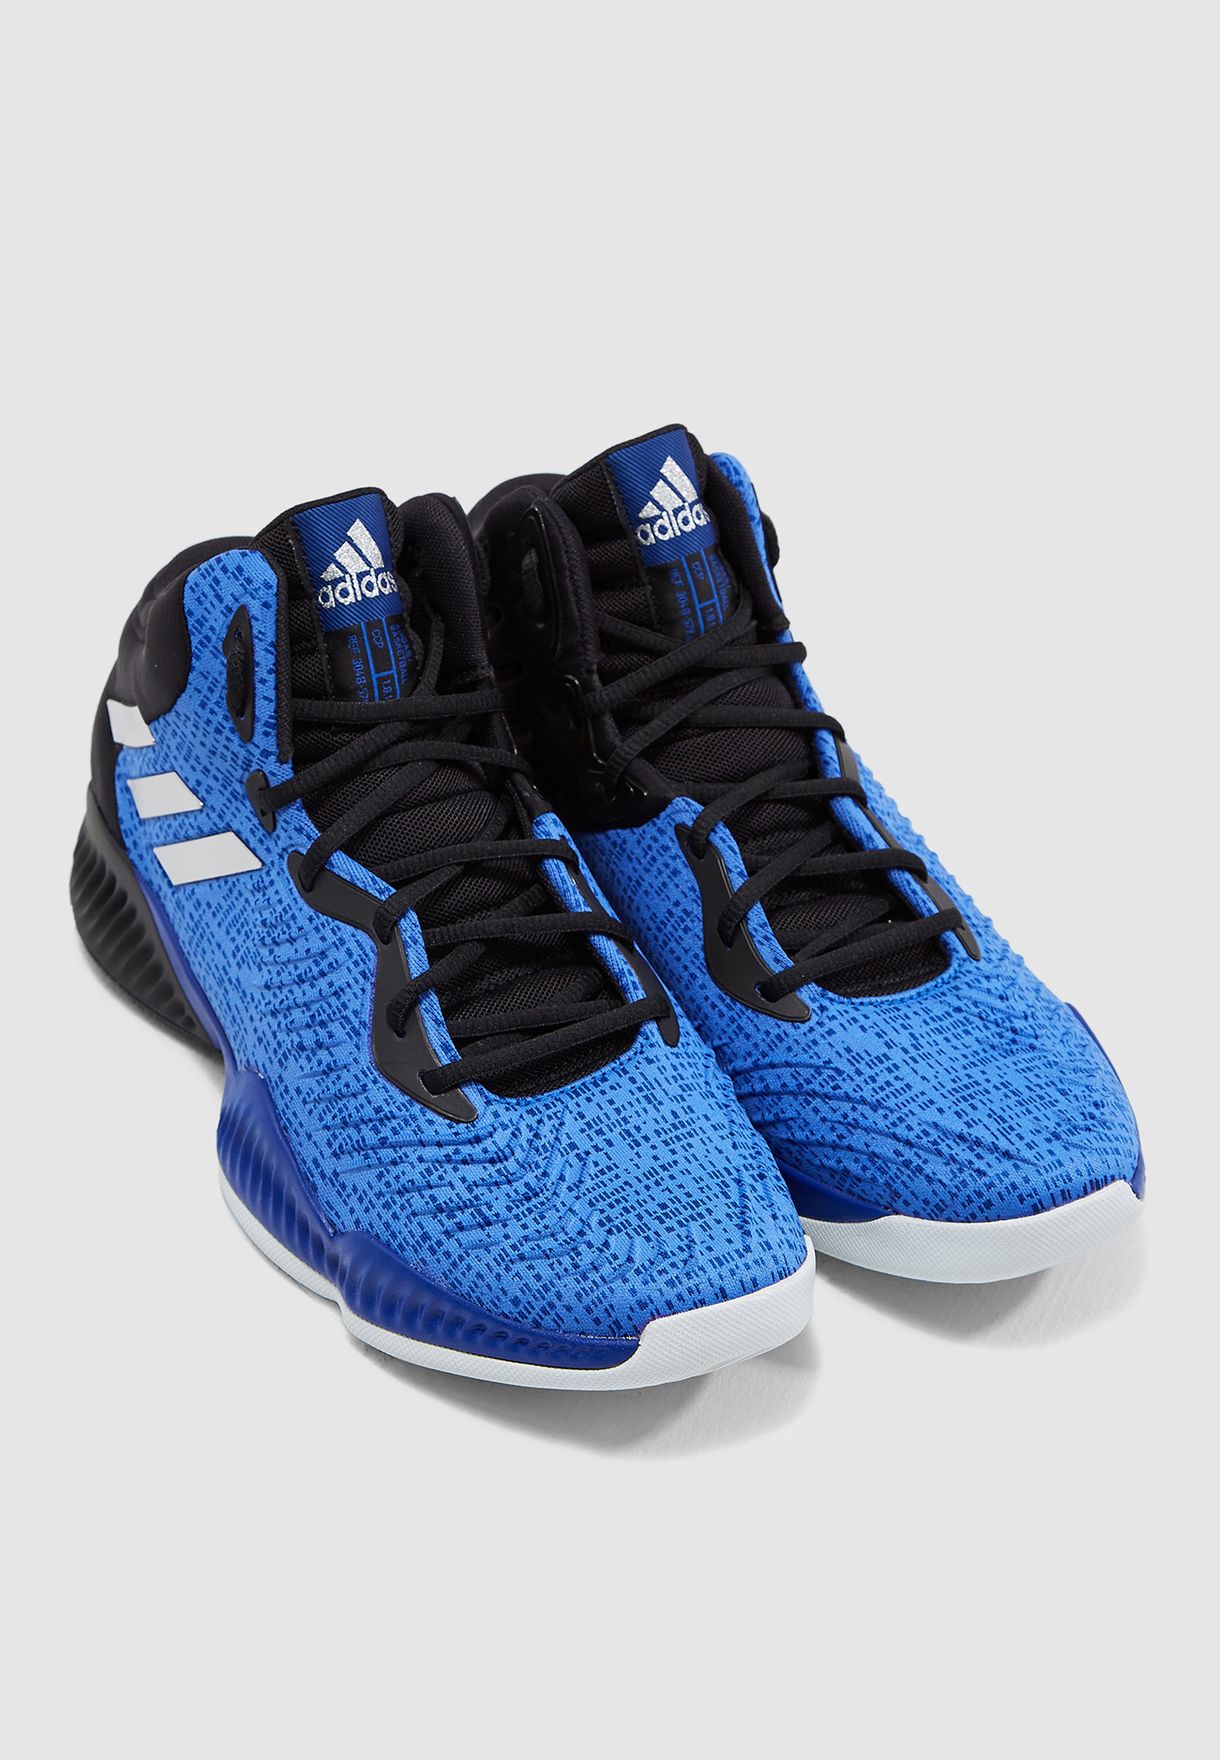 adidas mad bounce 2018 blue